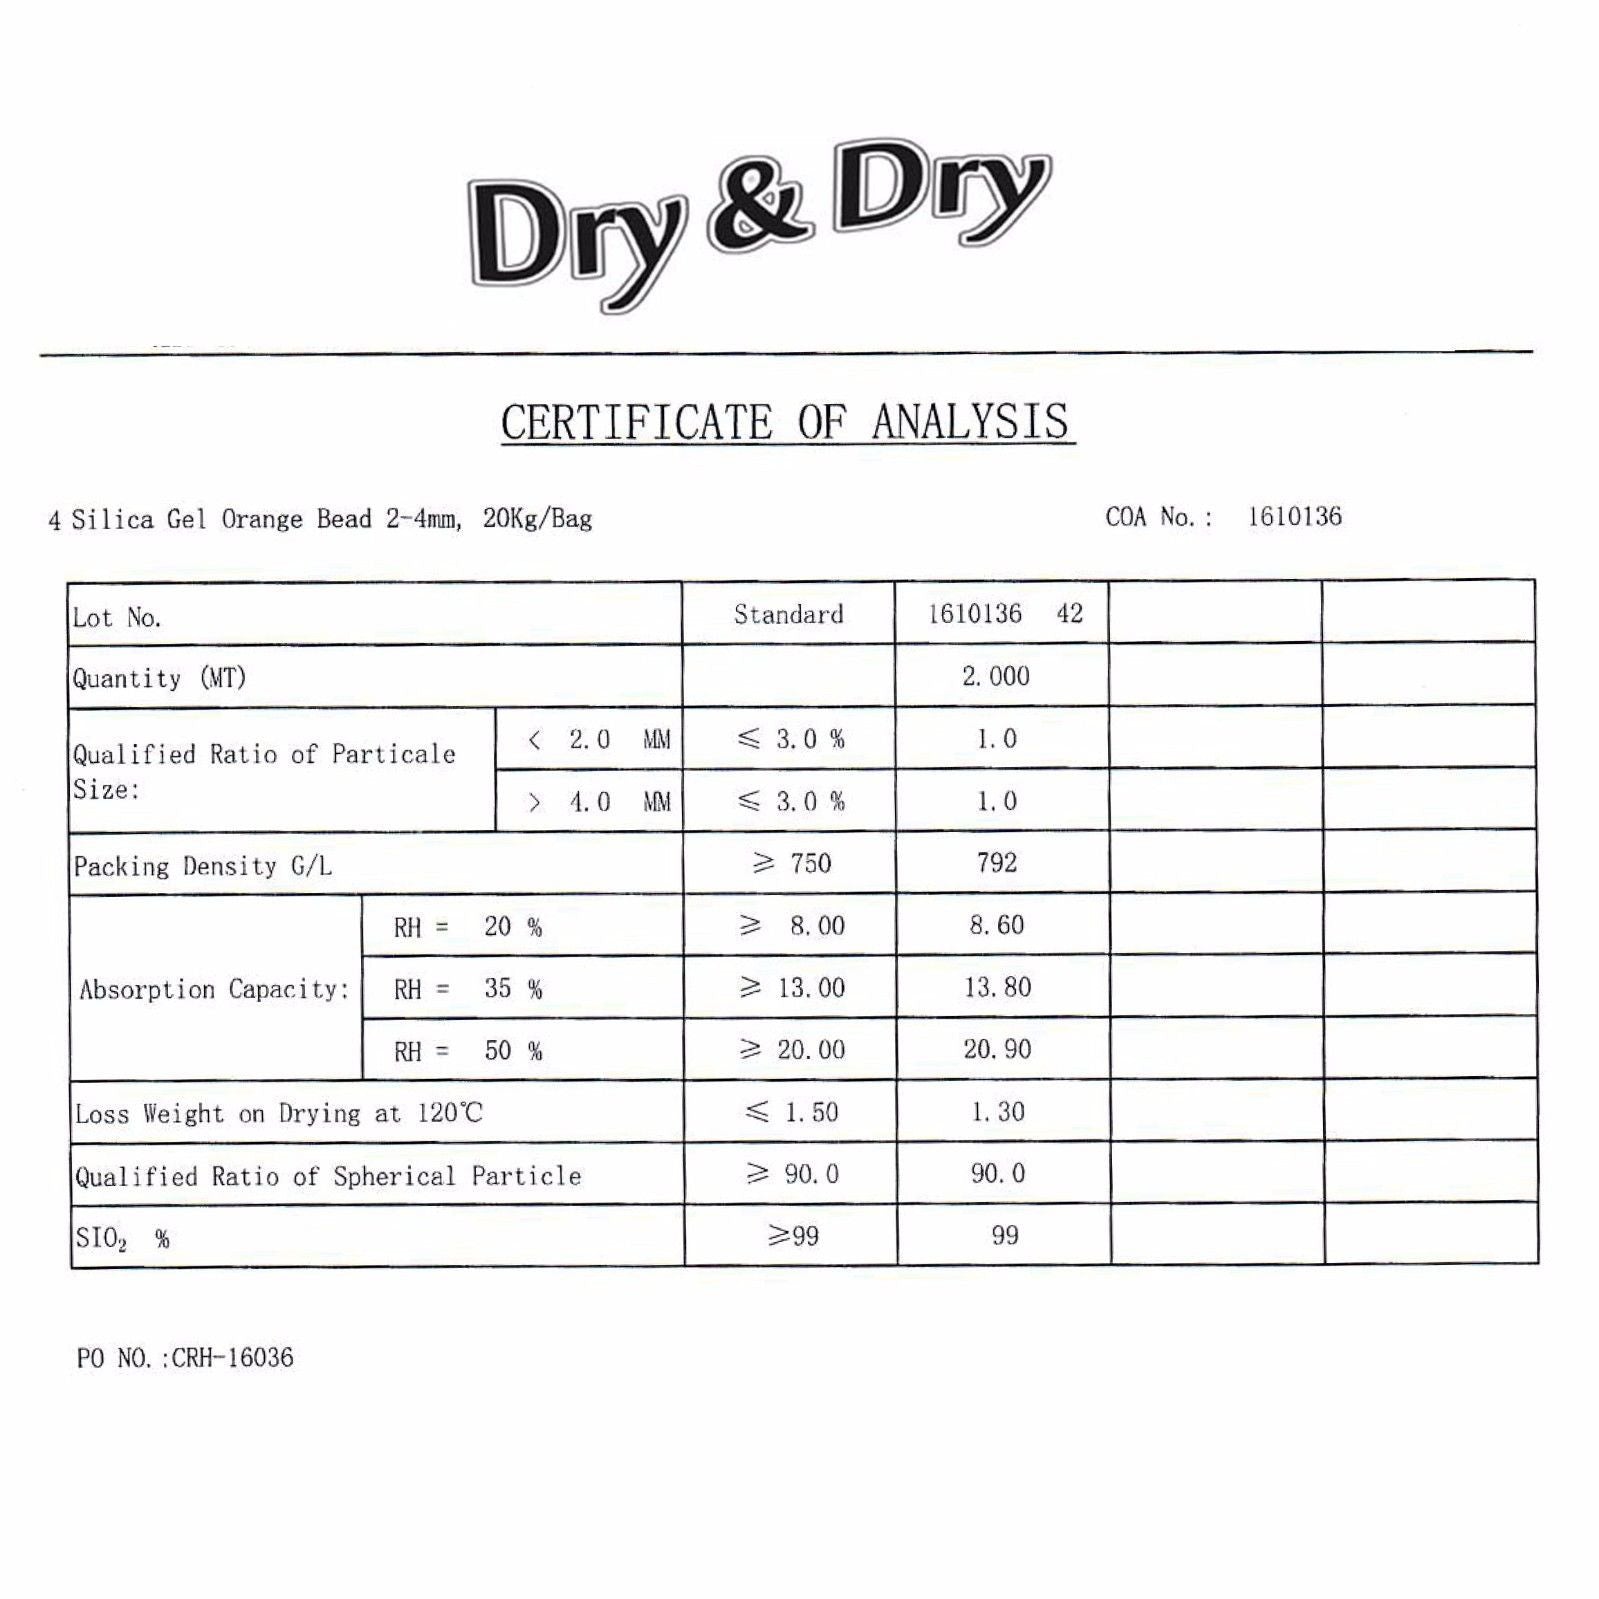 (5.5 LBS) "Dry & Dry" Premium Orange Indicating Silica Gel Desiccant Beads